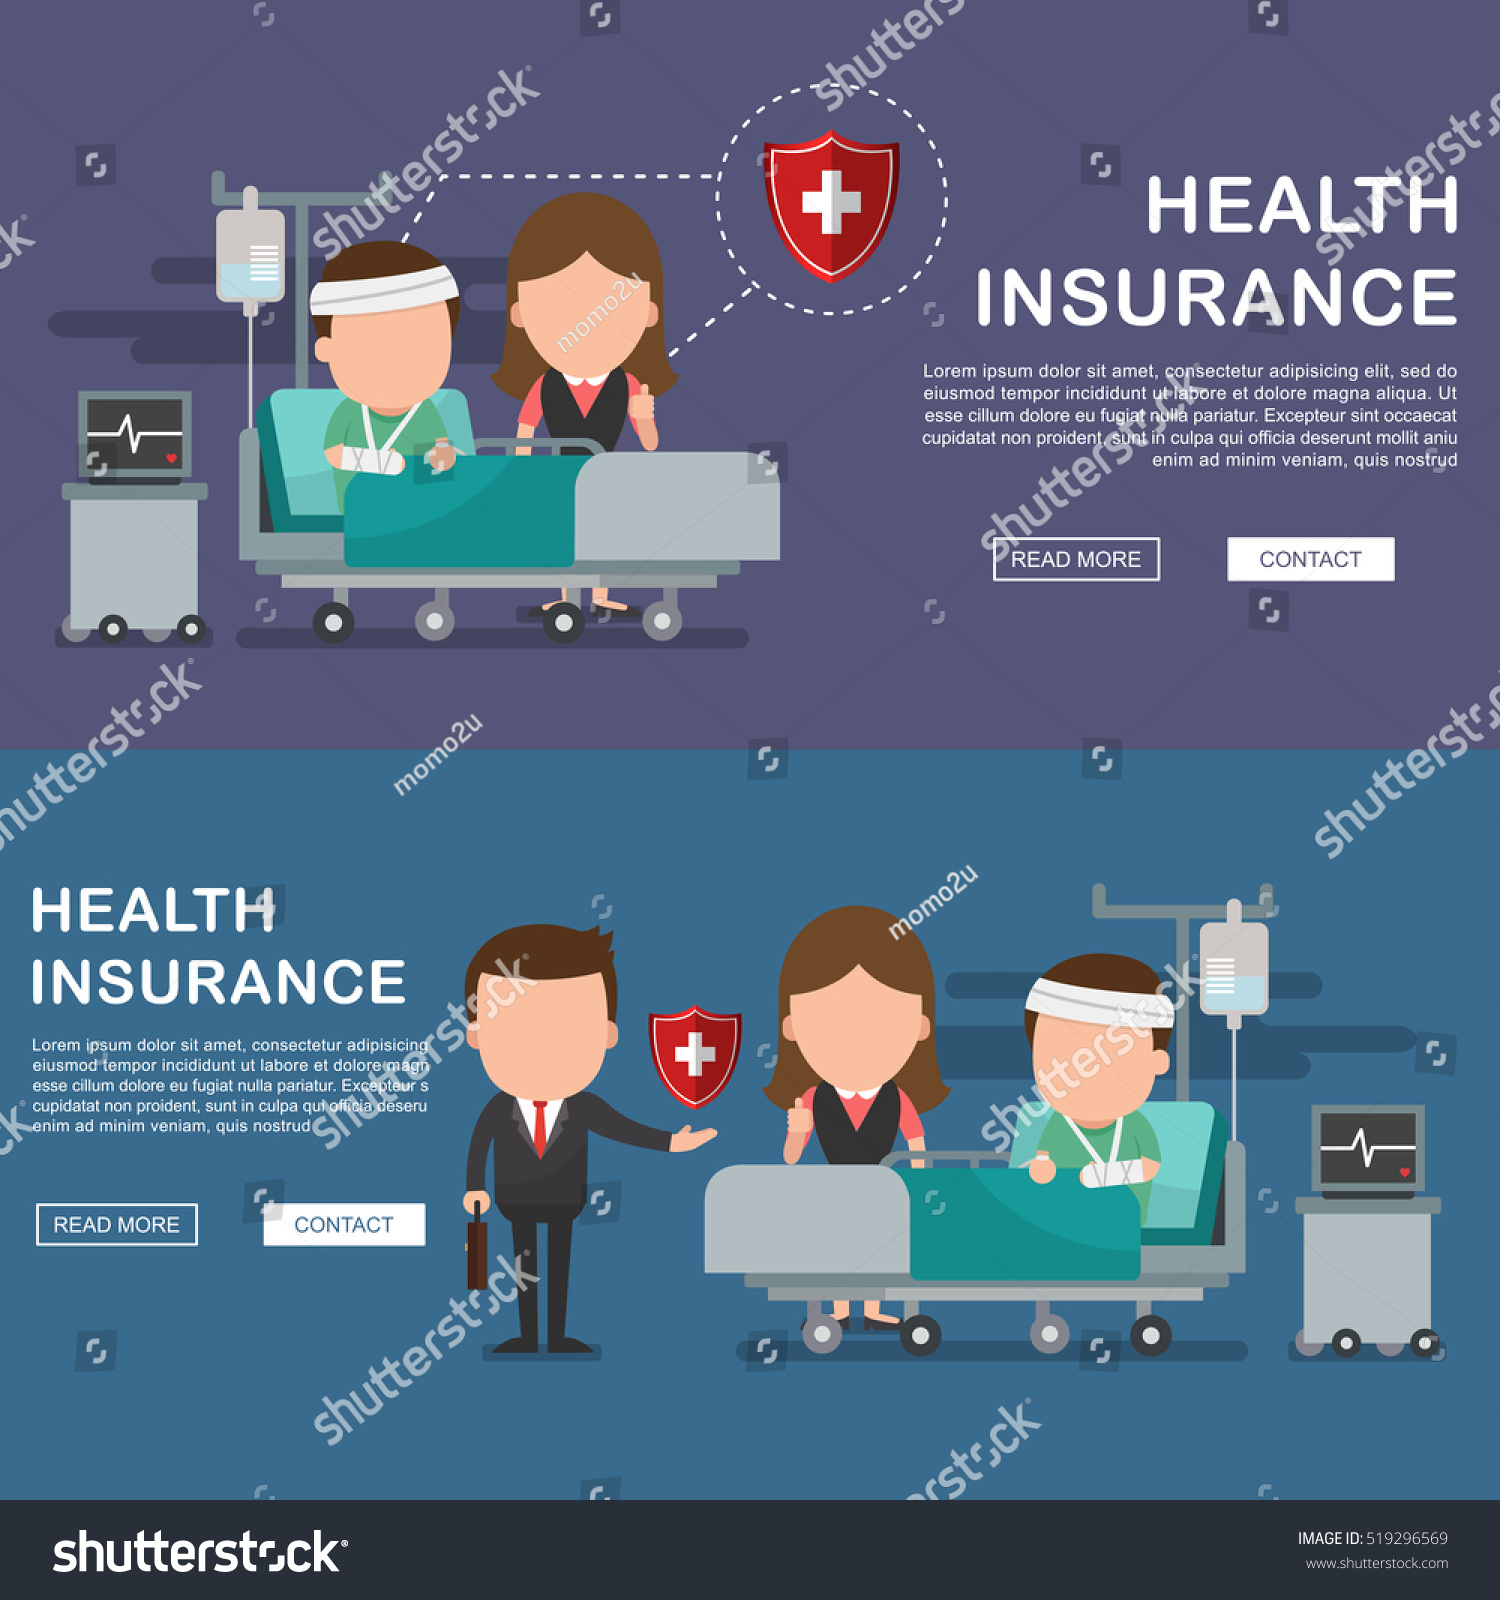 Vector De Stock Libre De Regalias Sobre Vector Illustration Man Hospital Injured Insurance519296569